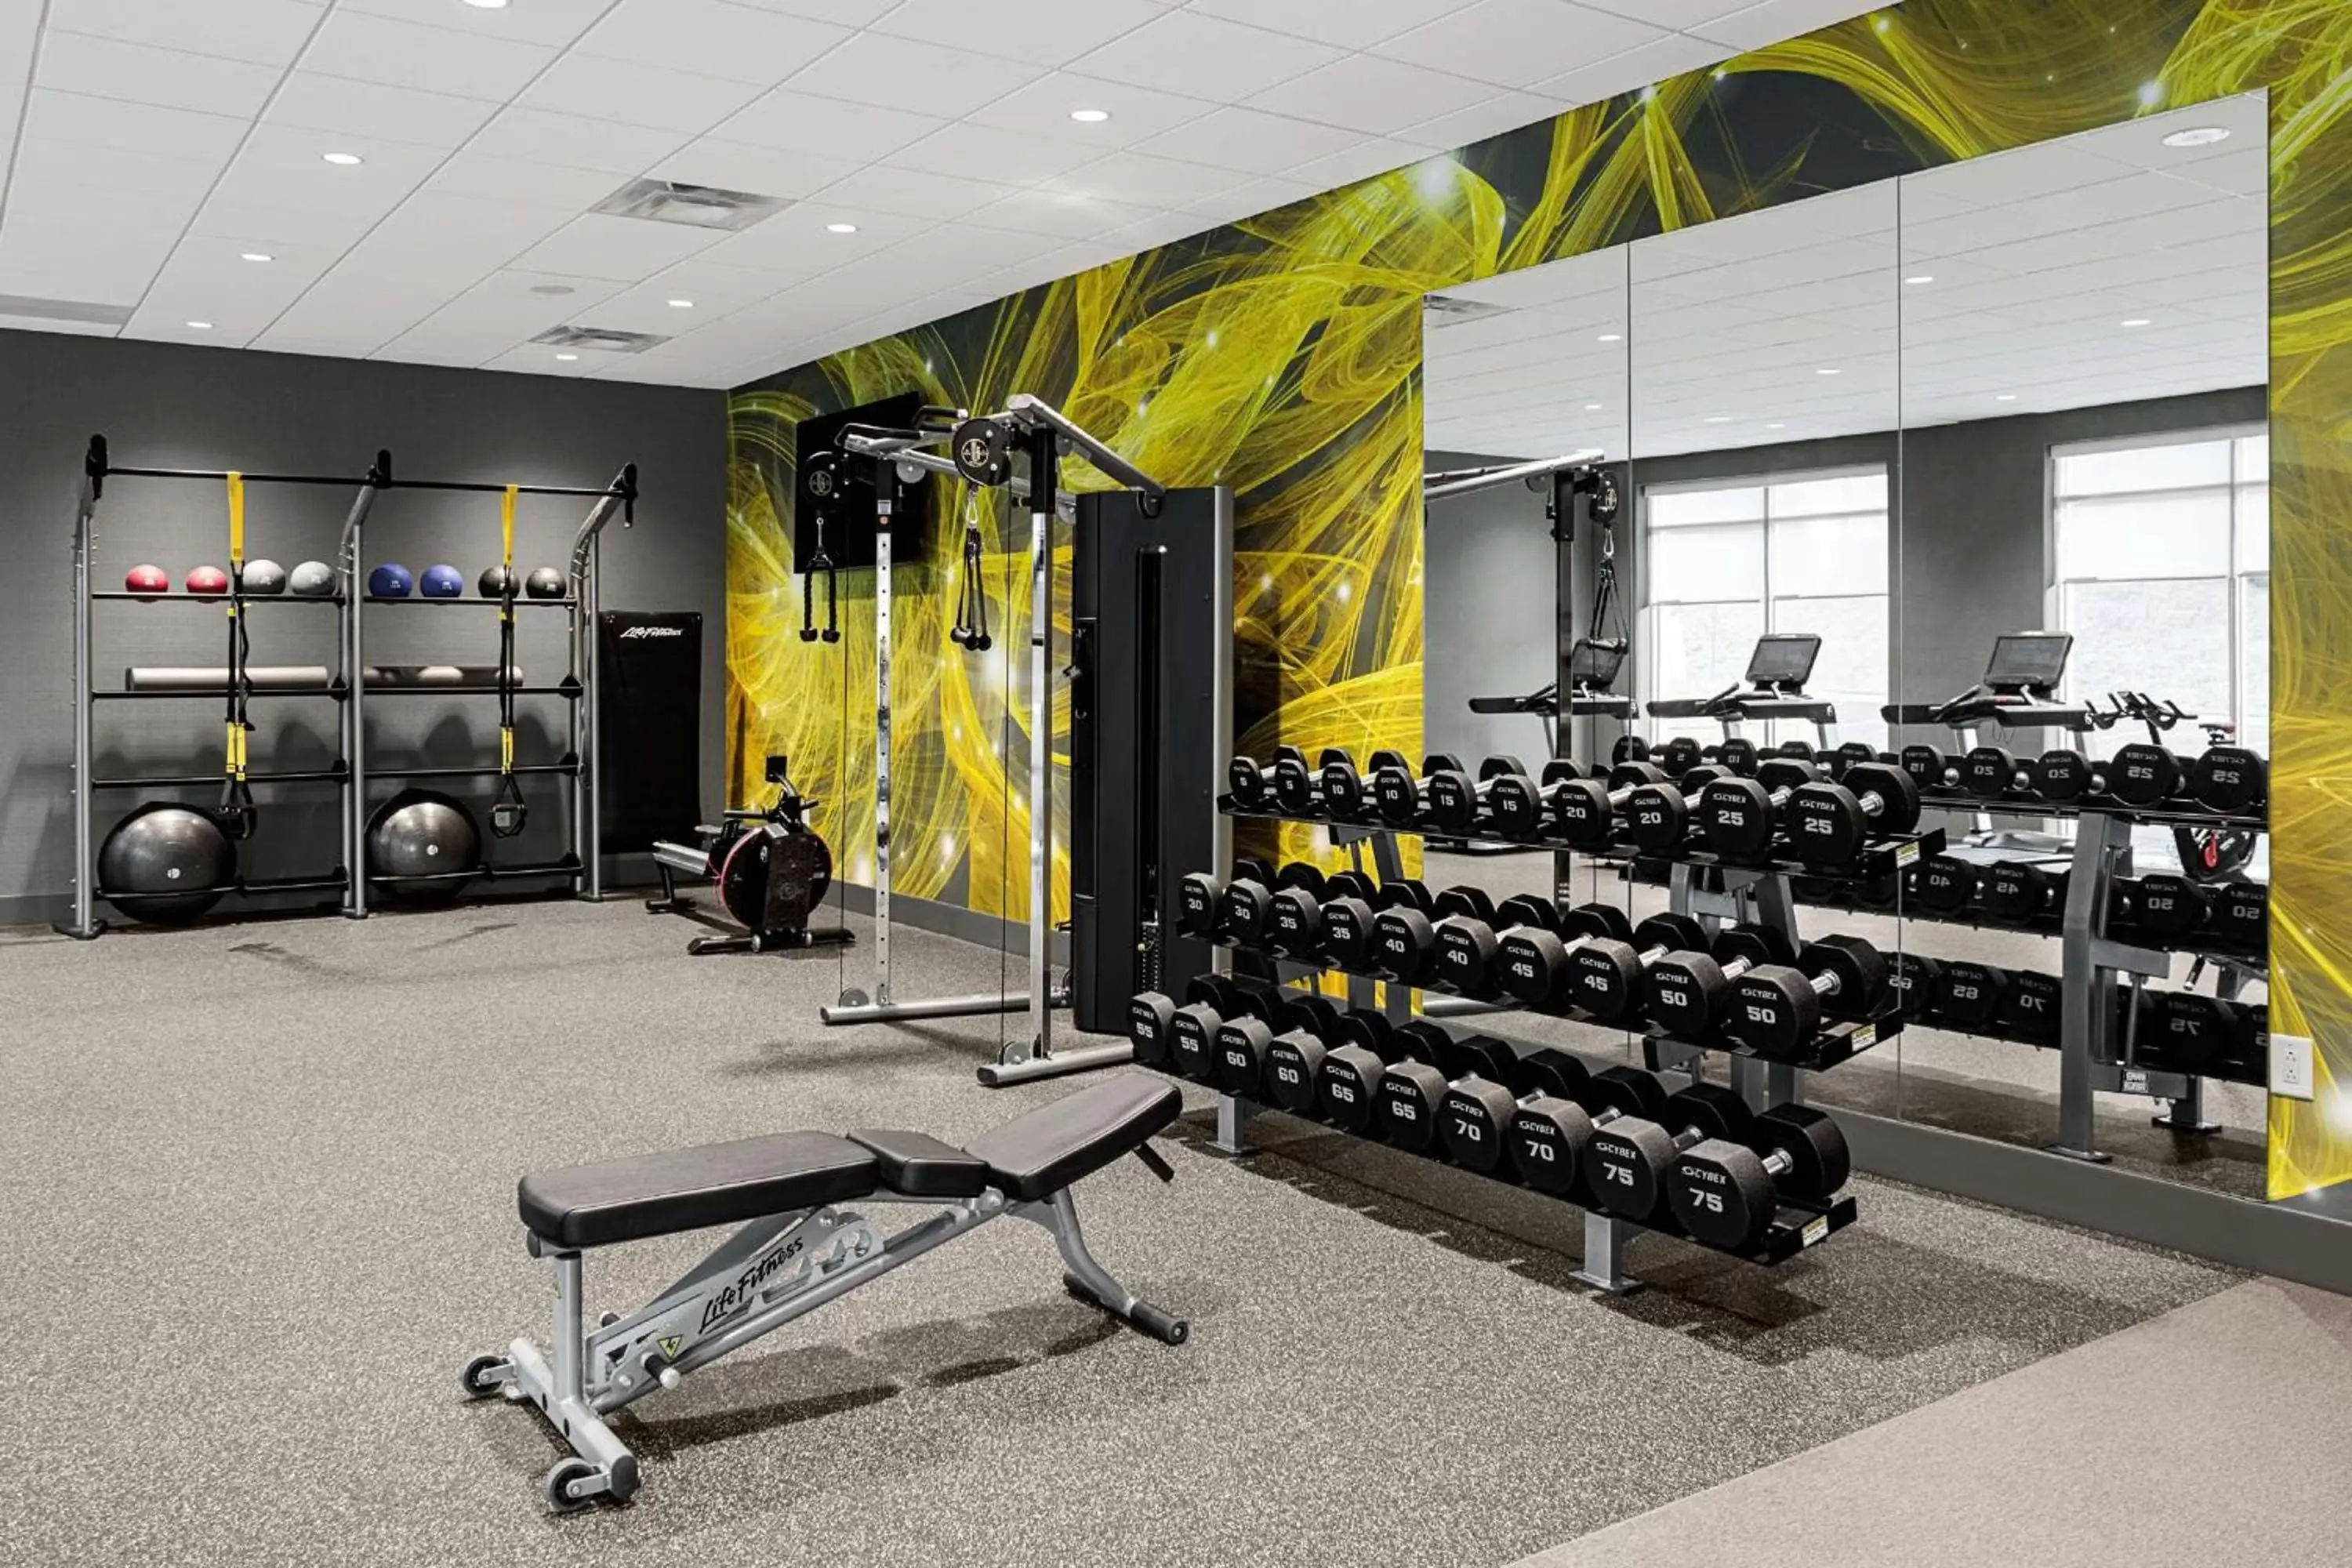 Fitness centre/facilities, Fitness Center/Facilities in Hilton Garden Inn Mt. Juliet, TN